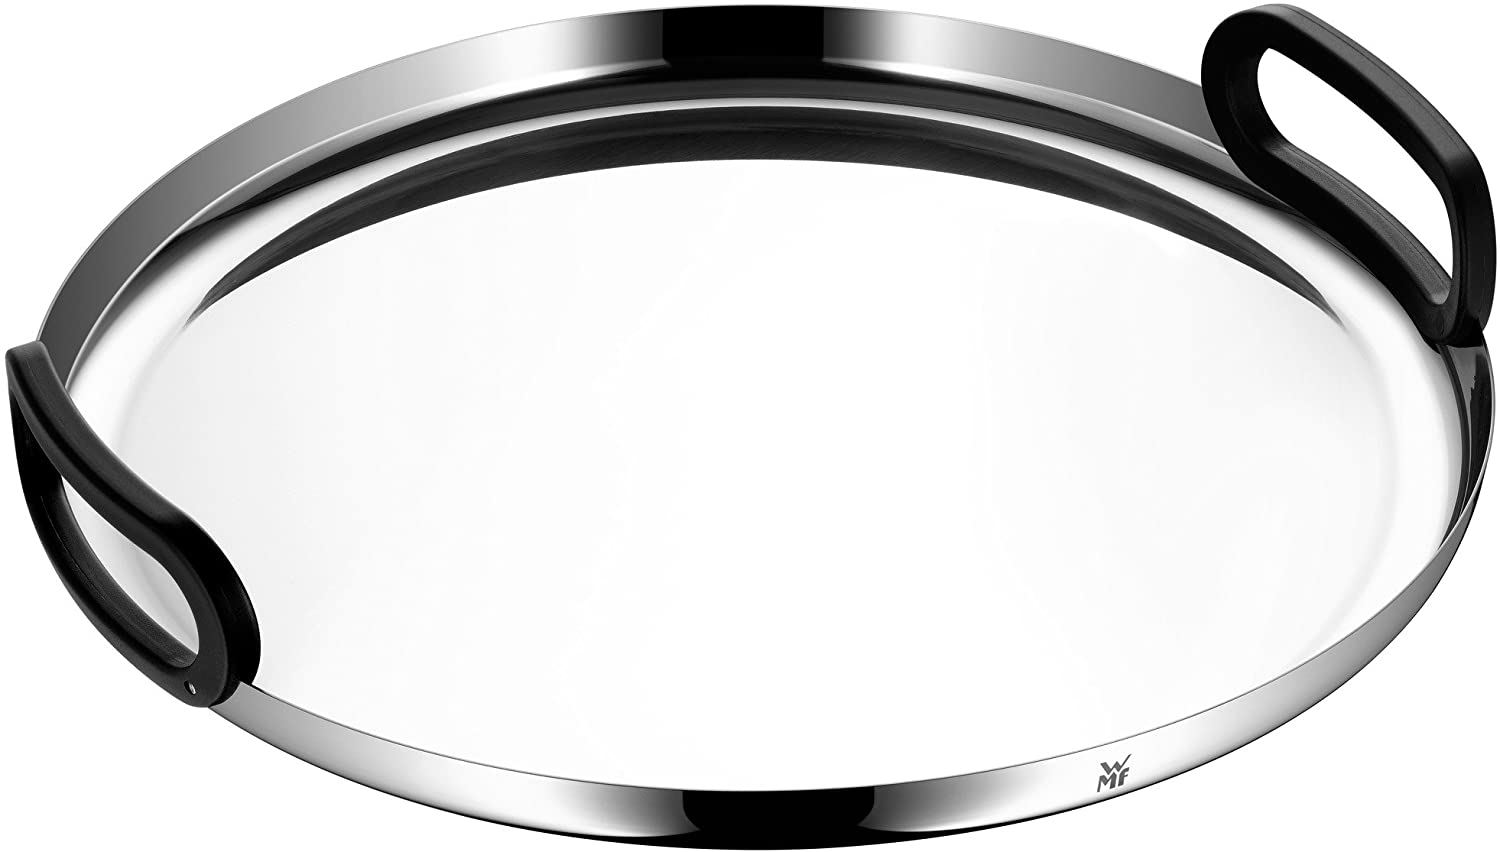 WMF CoffeeTime Tray Diameter 39 cm Polished Cromargan Stainless Steel Dishwasher Safe